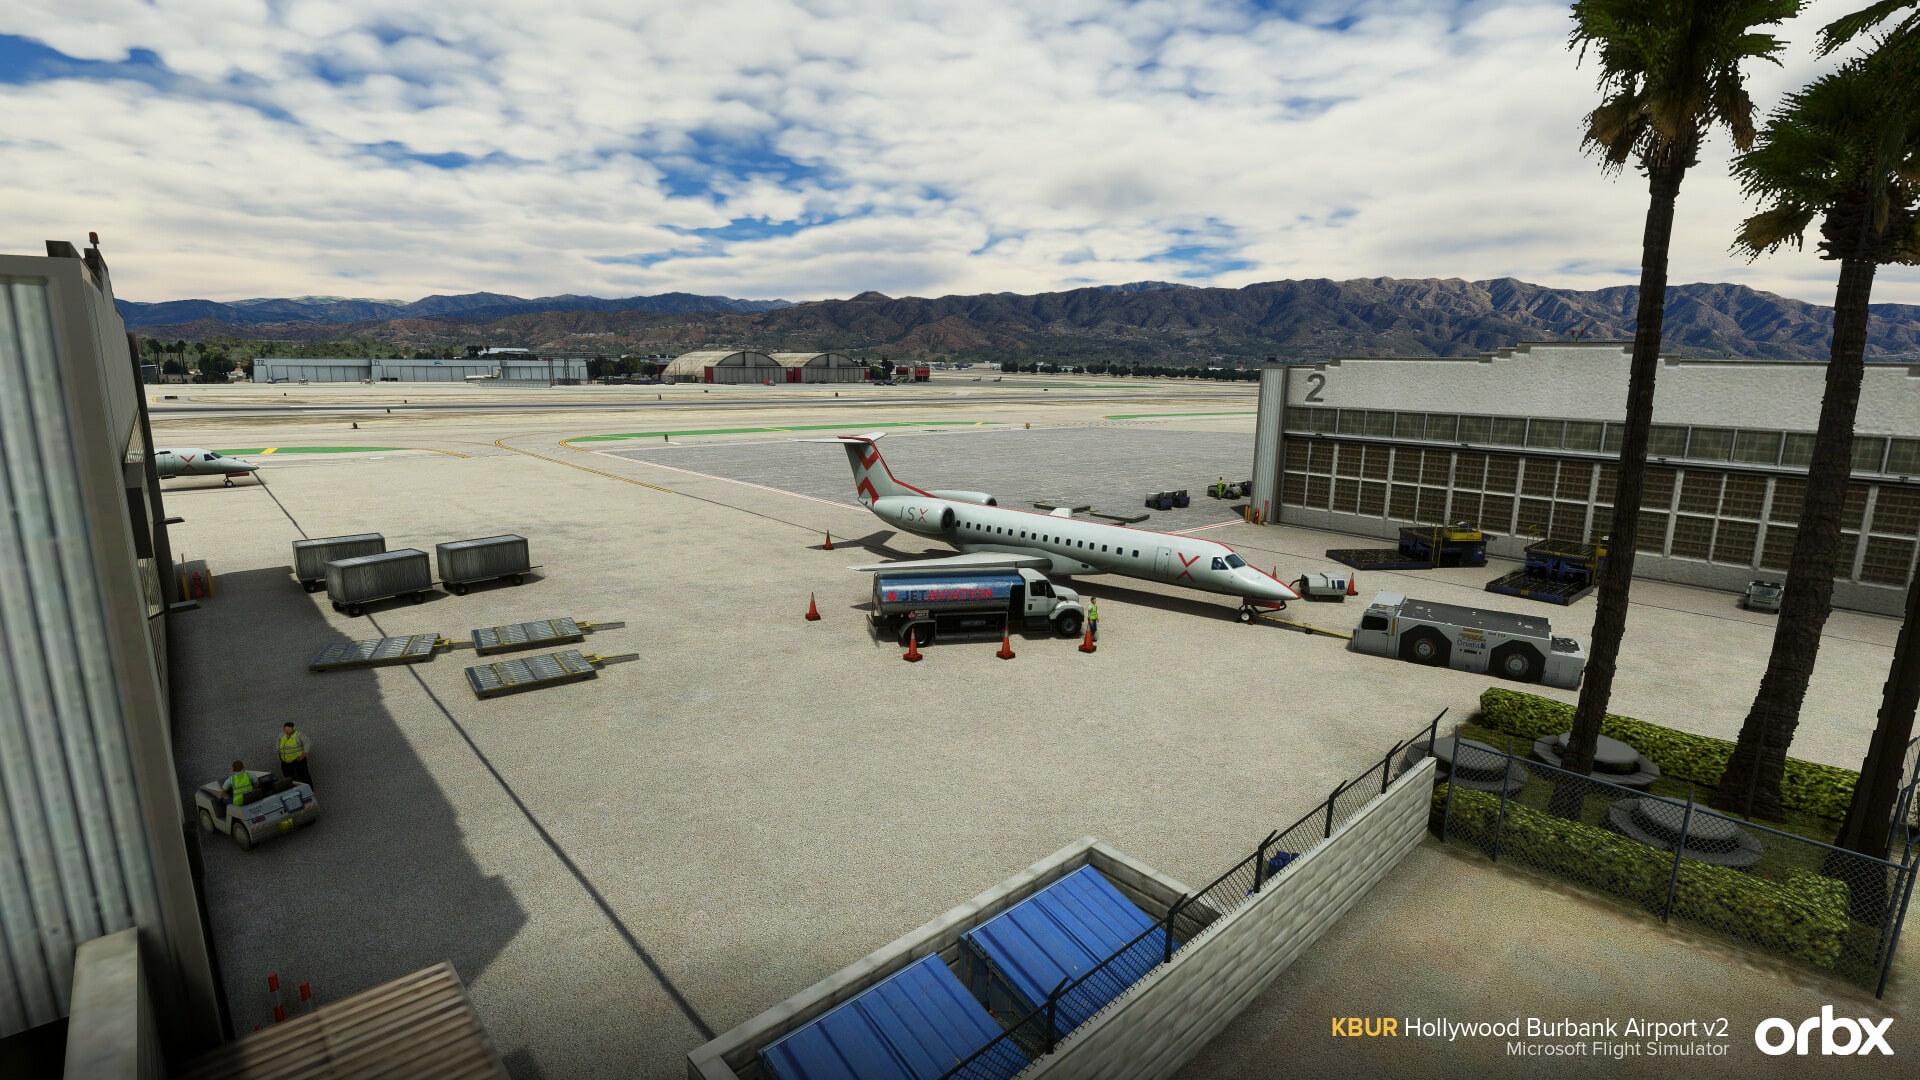 Orbx Announces Hollywood Burbank Airport v2 for MSFS - Microsoft Flight Simulator, FlightFX